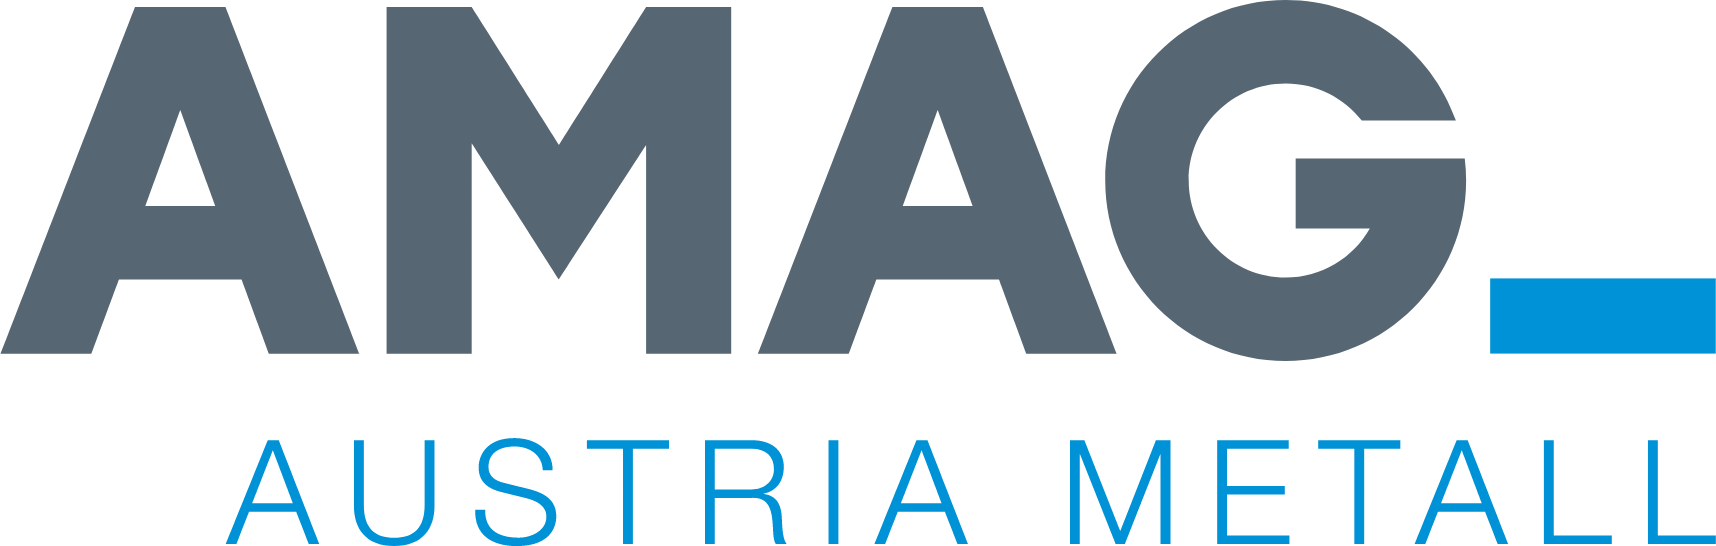 AMAG Austria Metall logo large (transparent PNG)